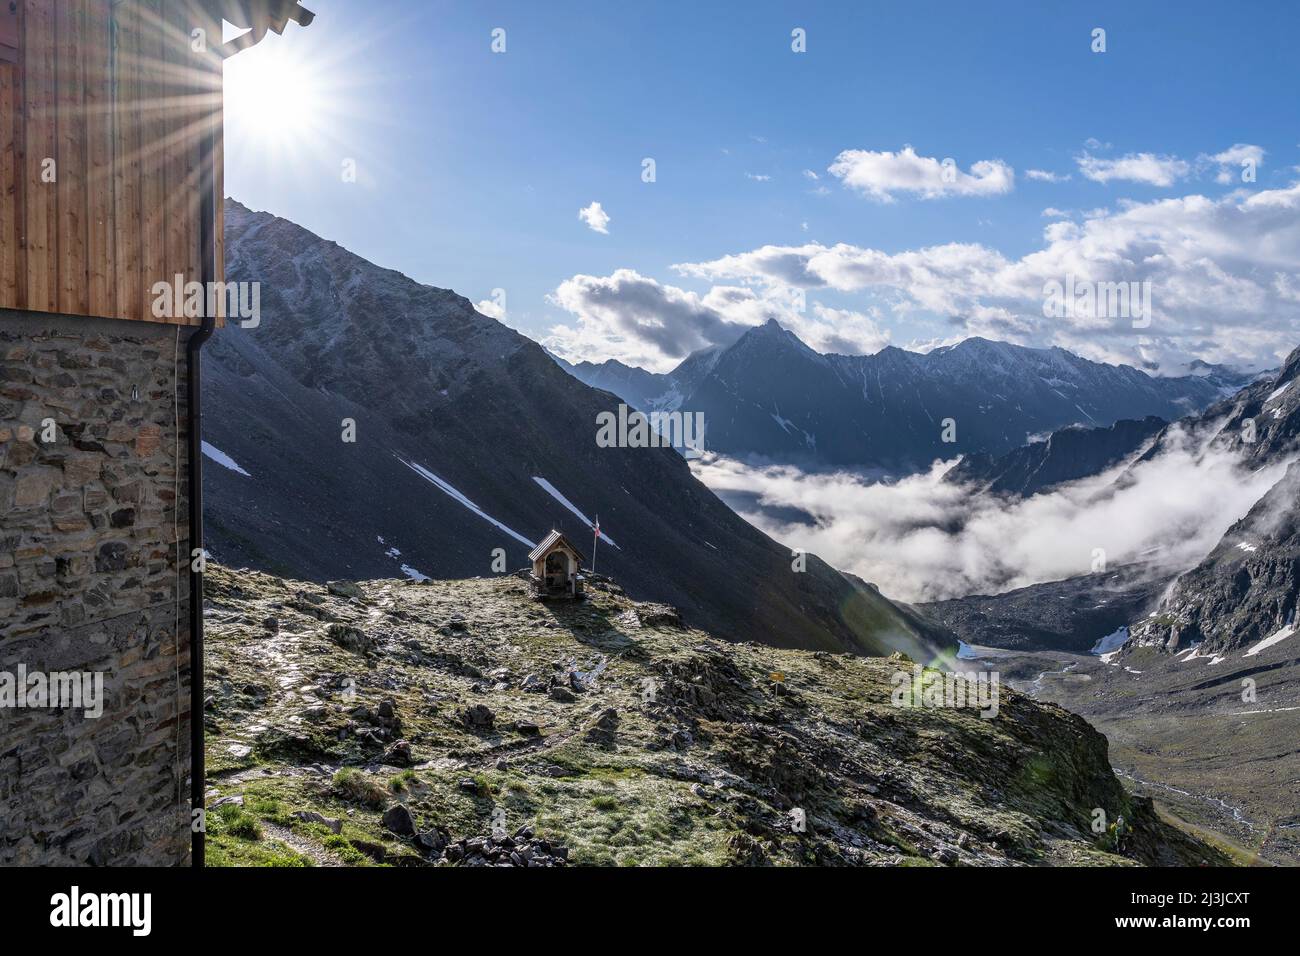 Europe, Alps, Austria, Tyrol, Pitztal, Kaunergrat, view from Kaunergrat hut to Geigenkamm ridge Stock Photo